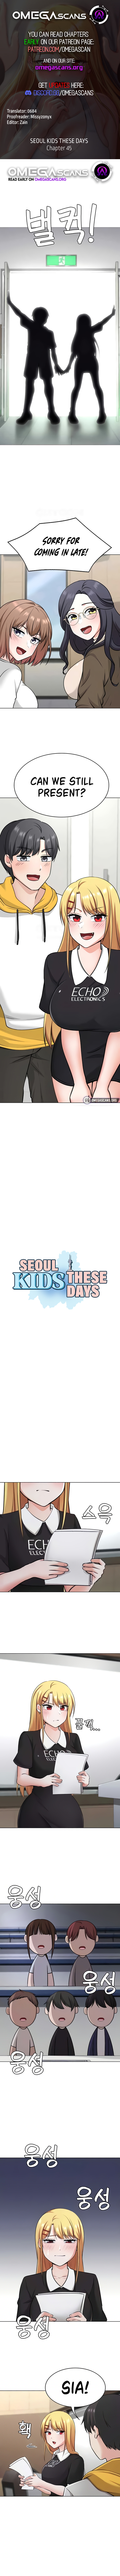 Seoul Kids these Days NEW image